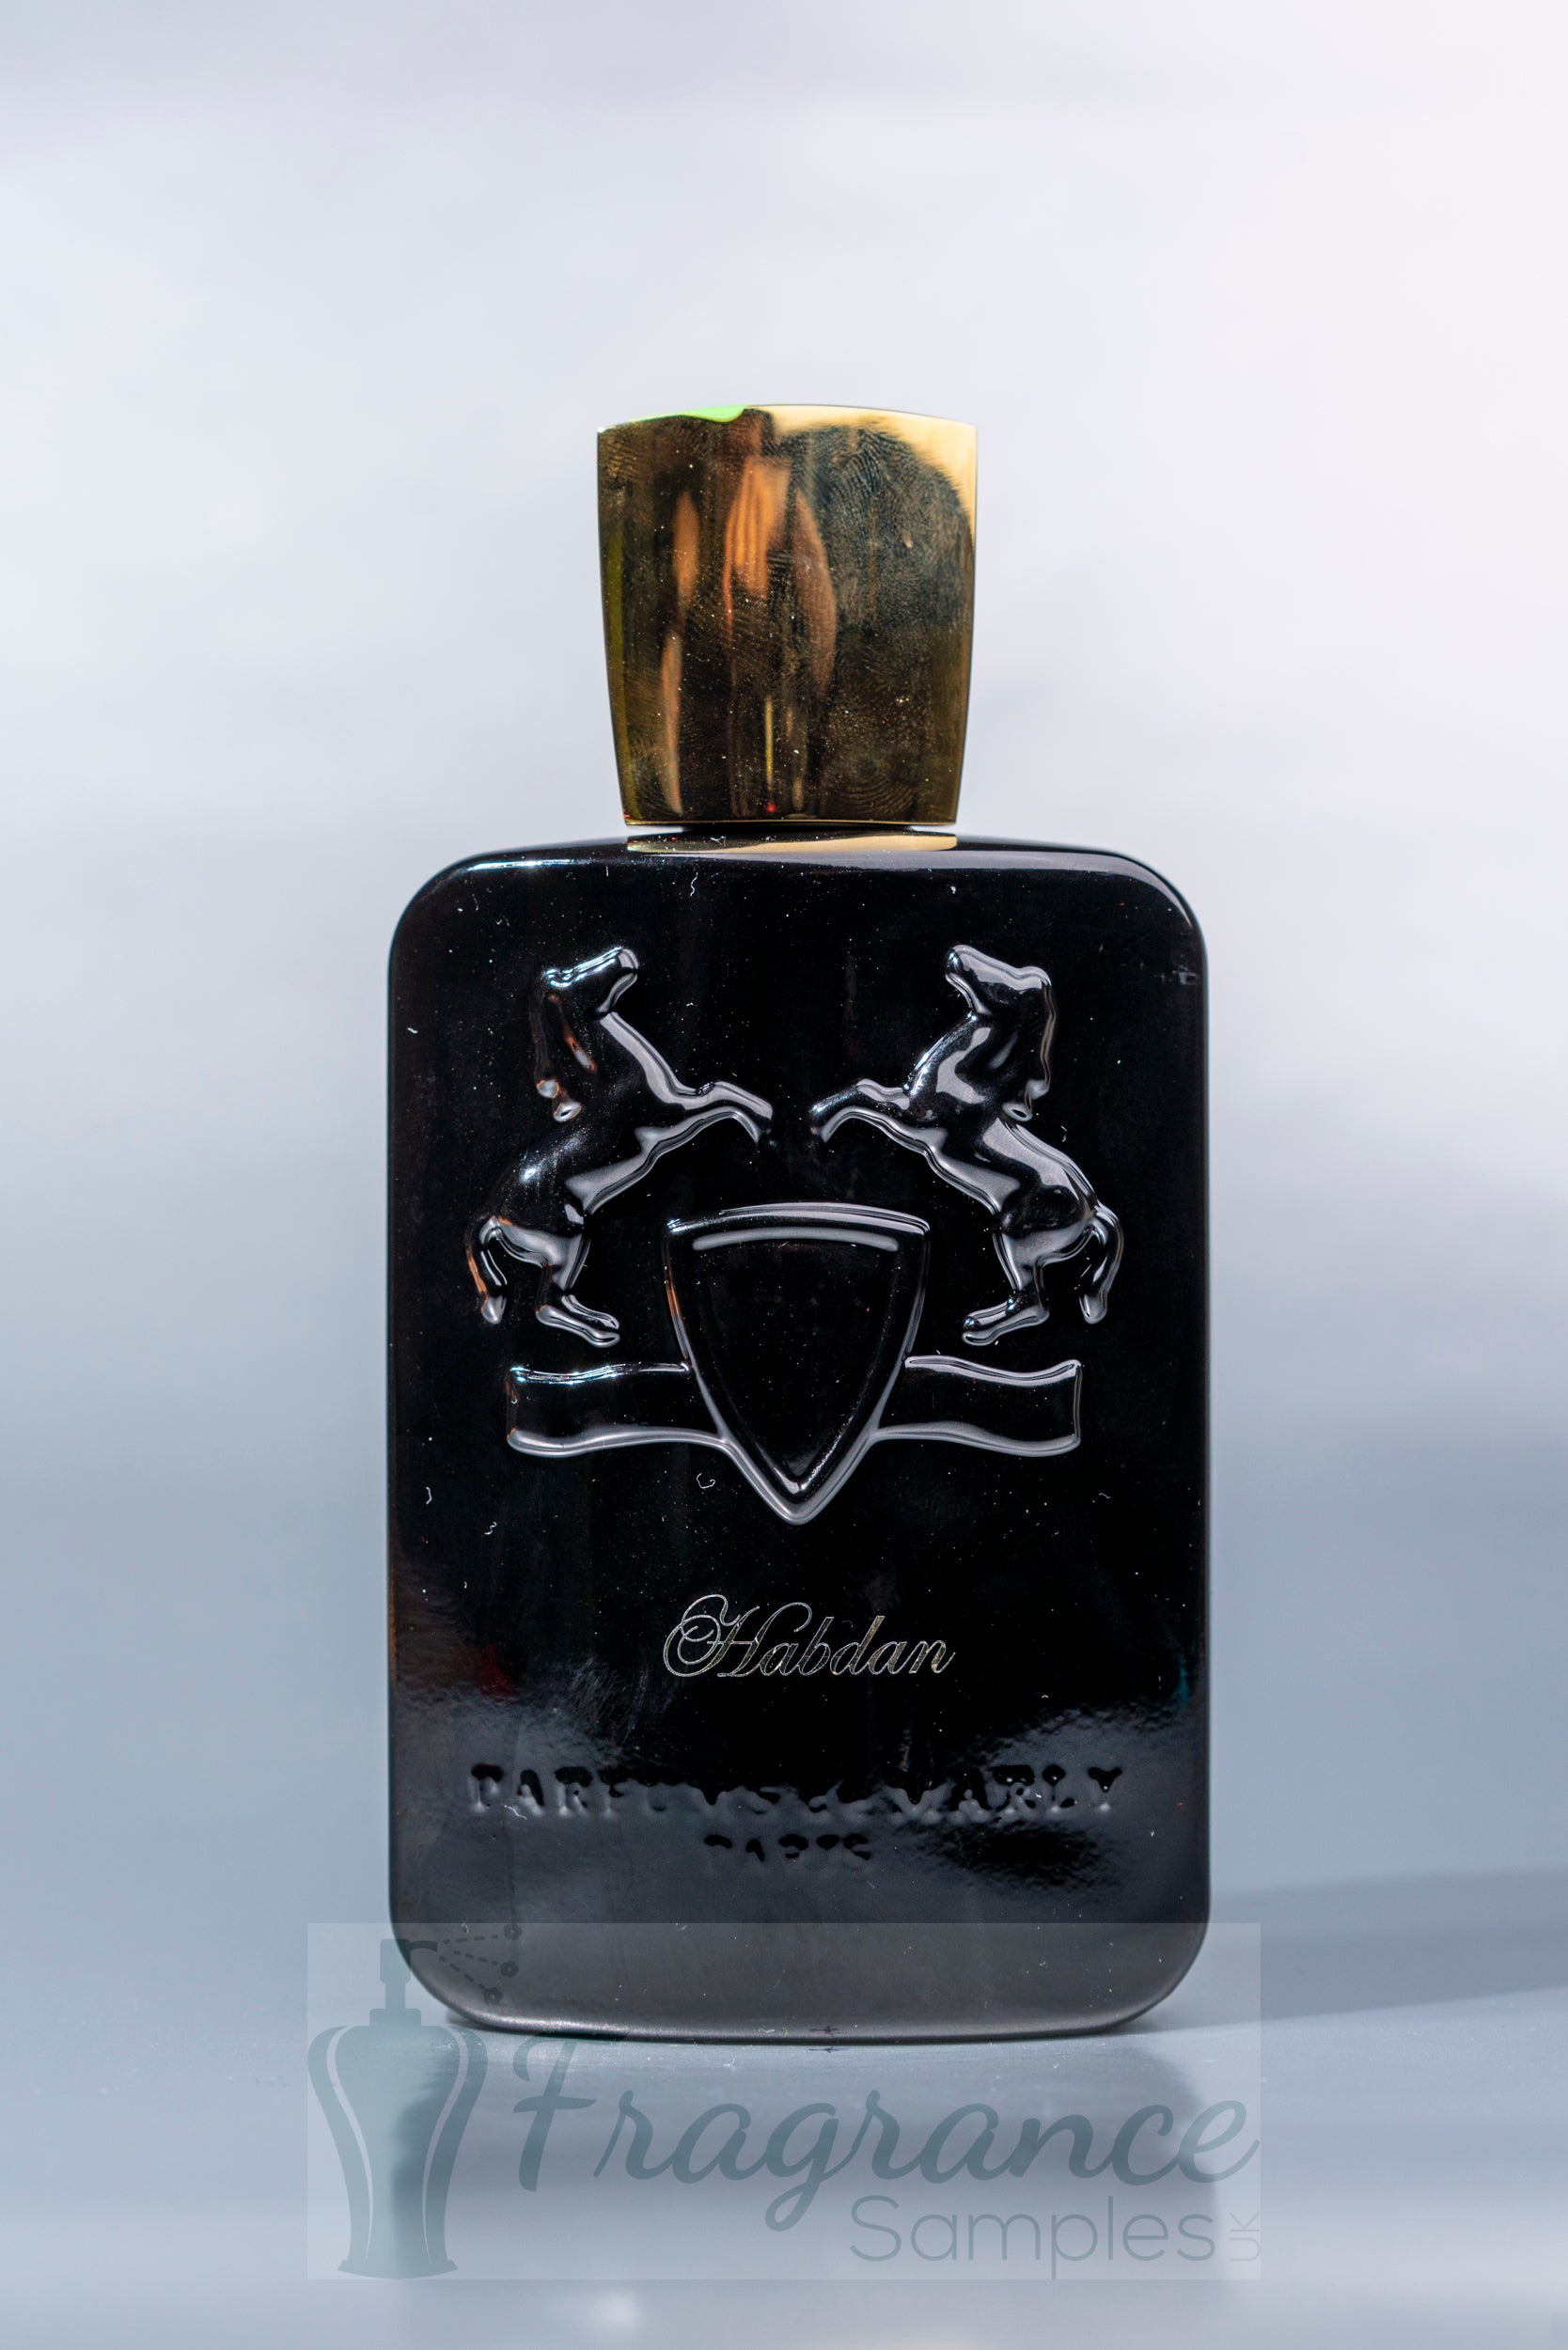 Parfums de Marly Habdan